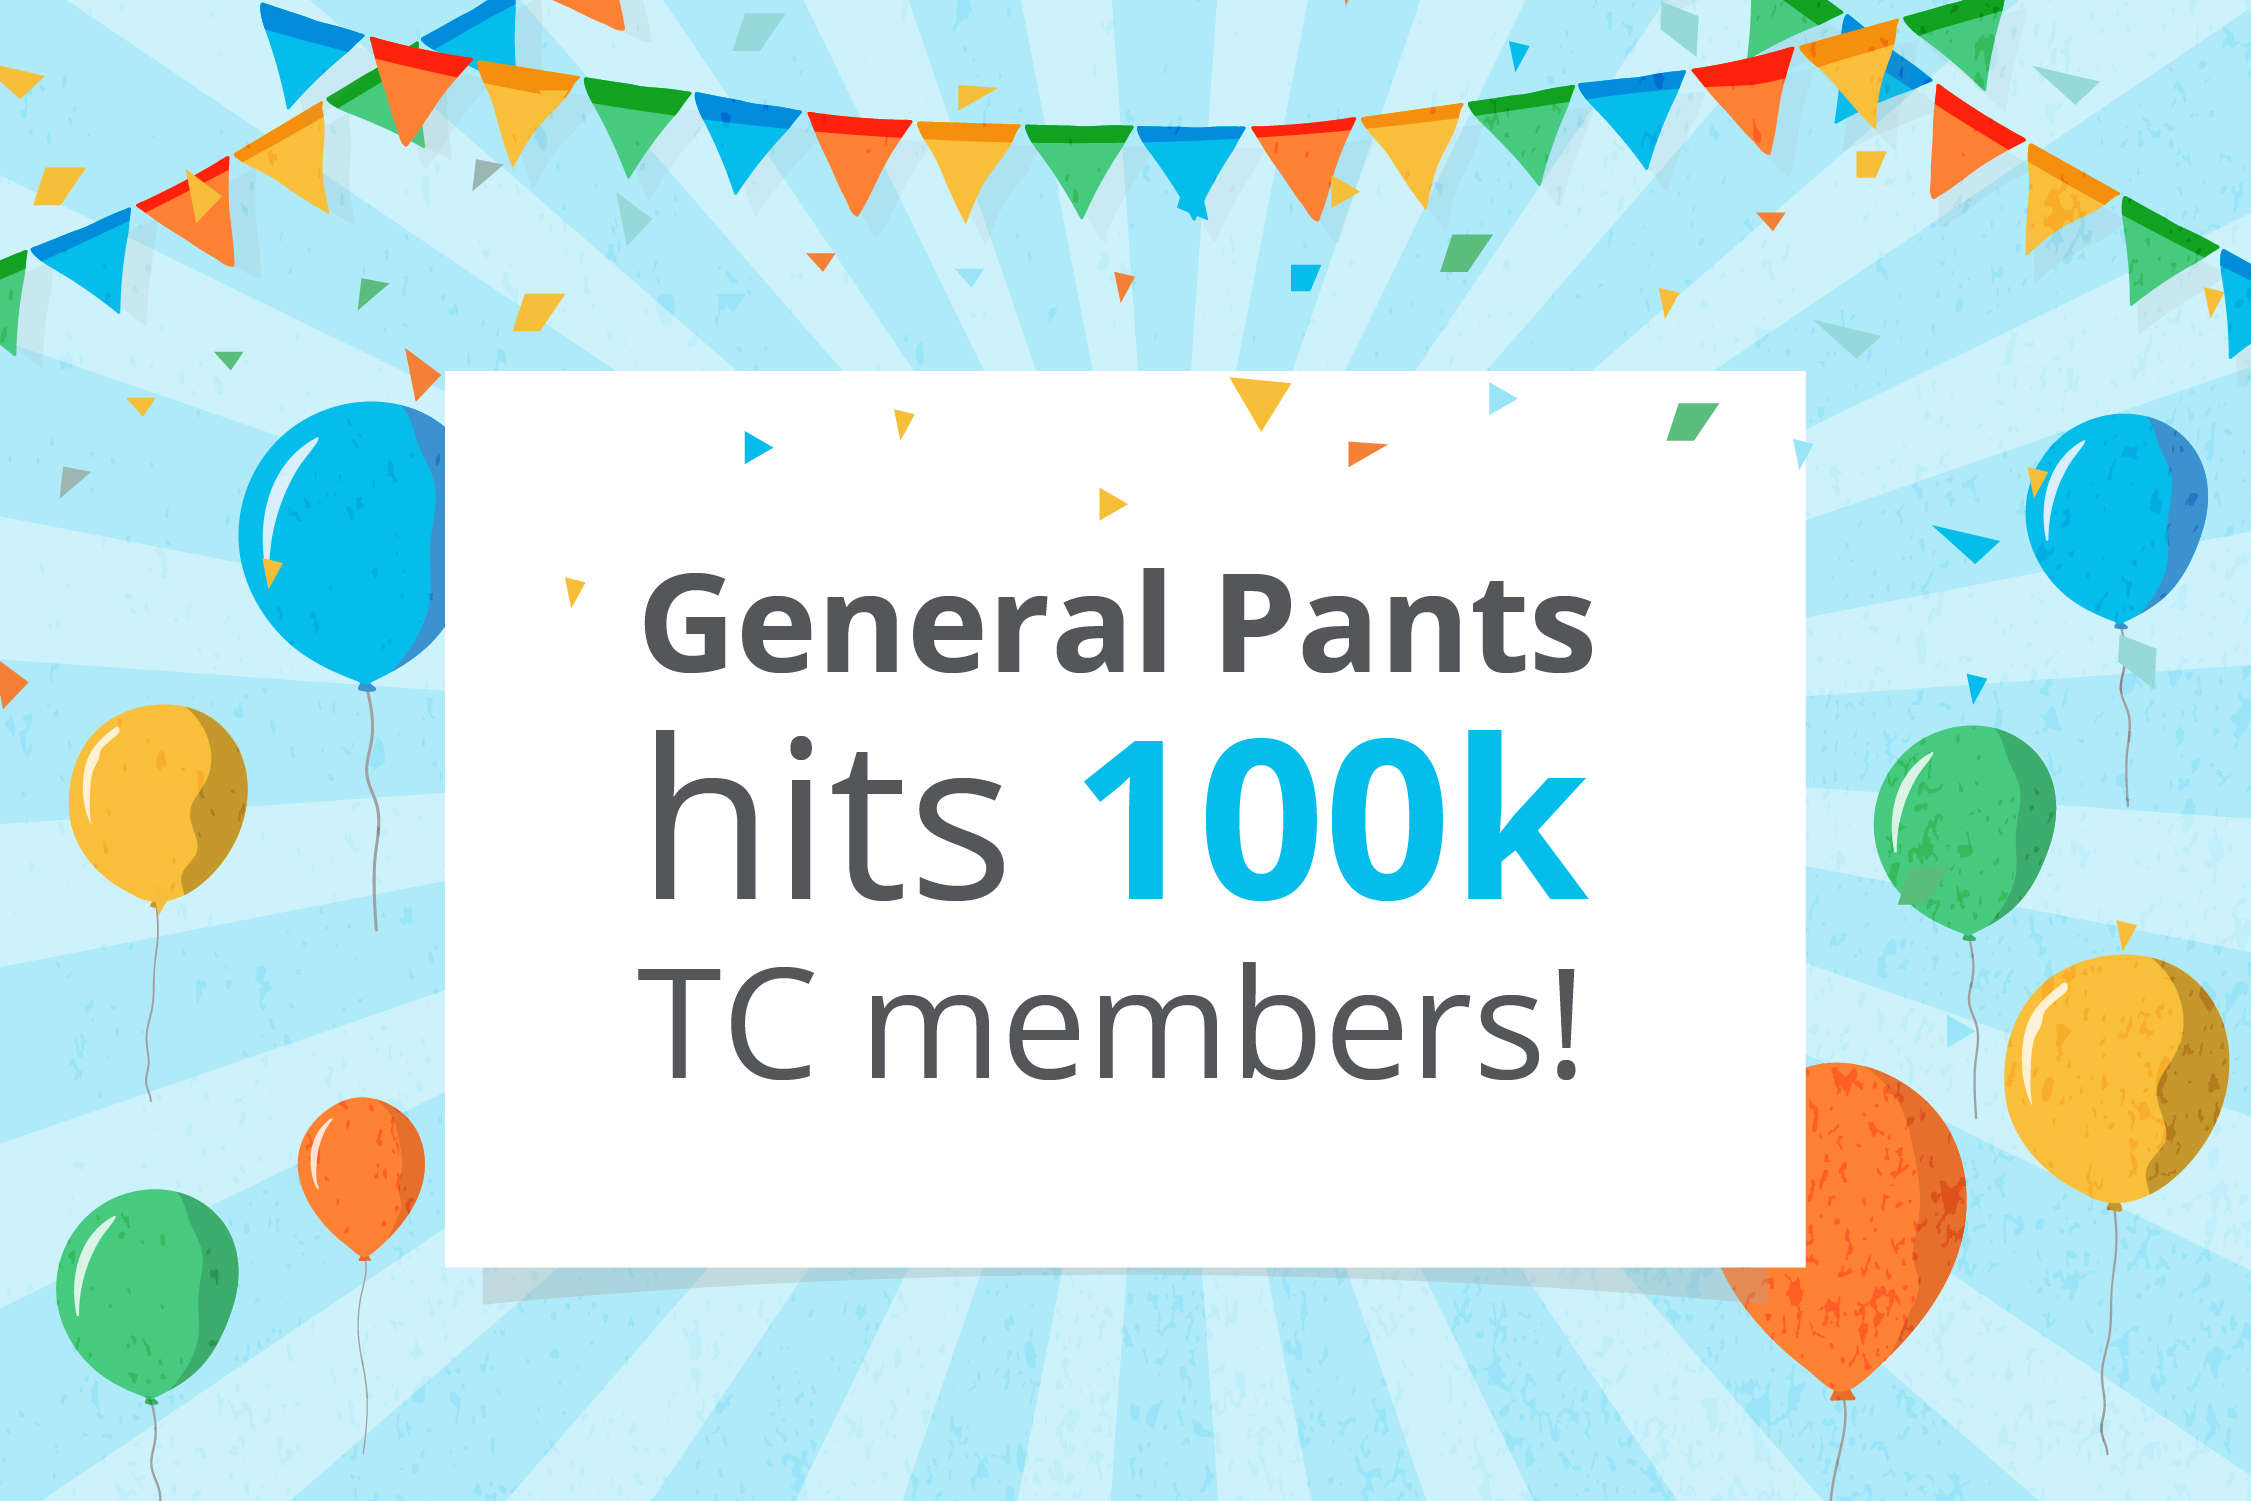 General Pants hit 100,000 Talent Community members 🙌 #HighFive